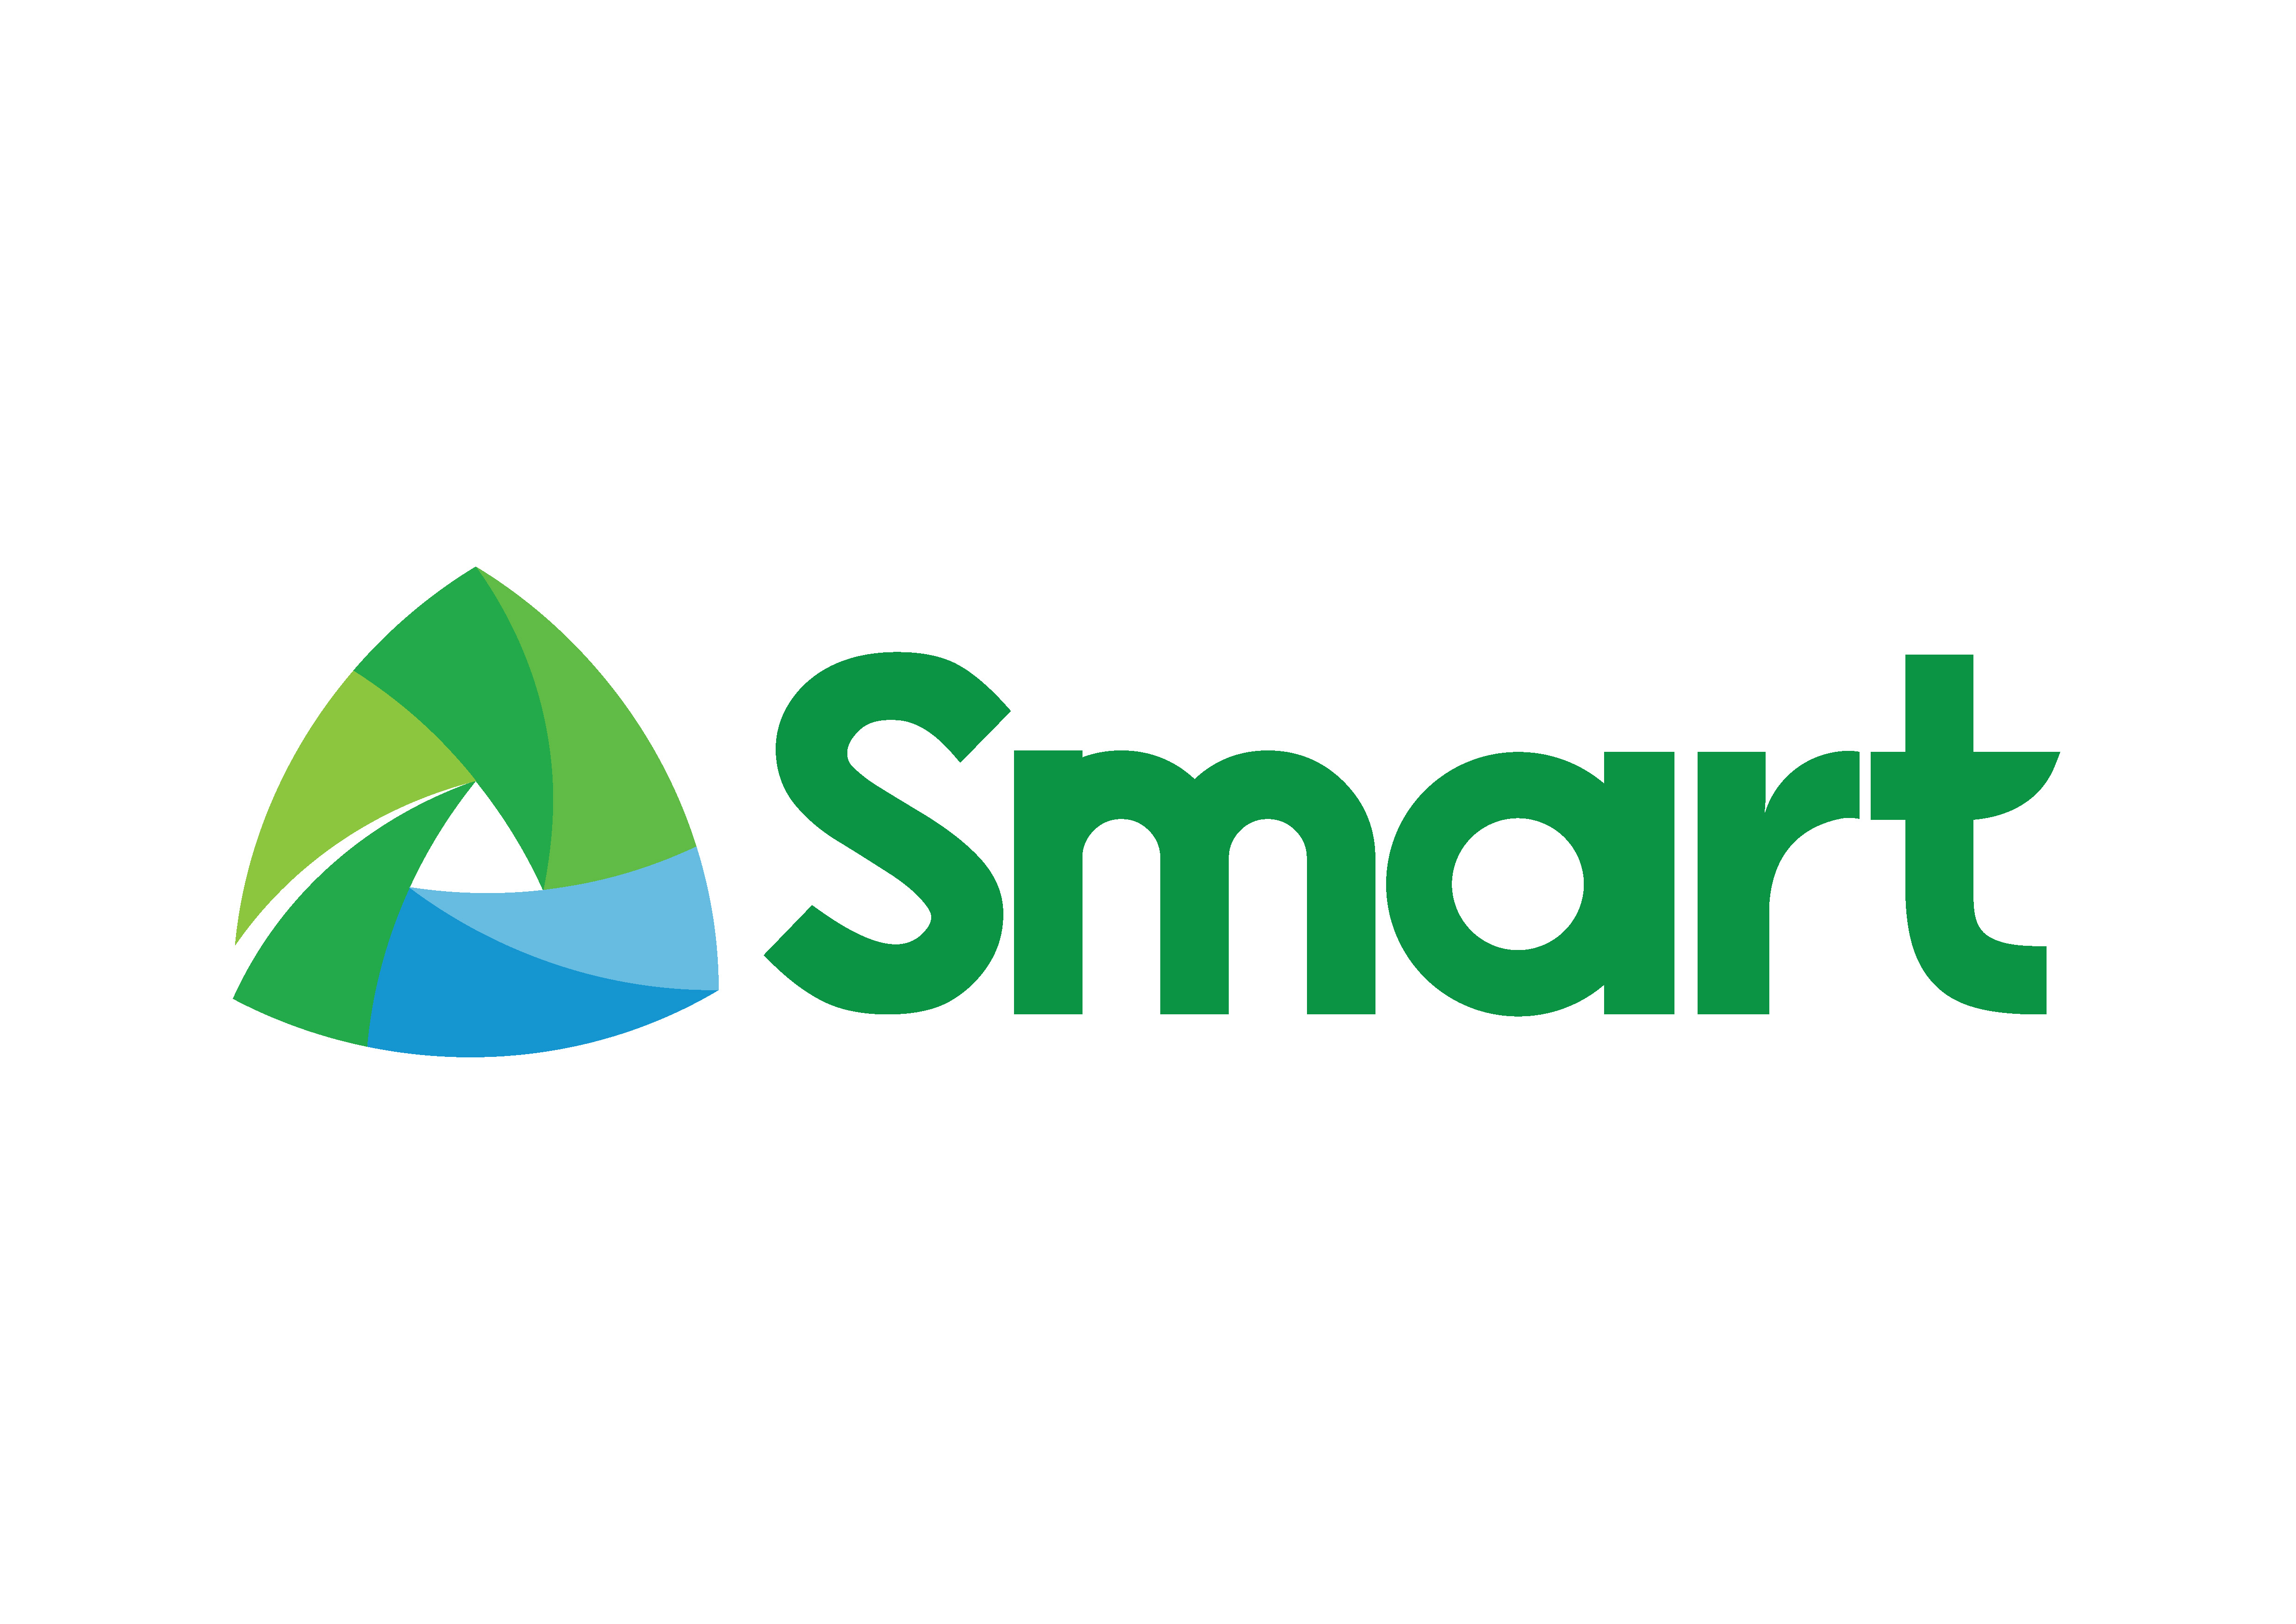 PLDT, Smart unveil new logo in line with 'digital pivot'